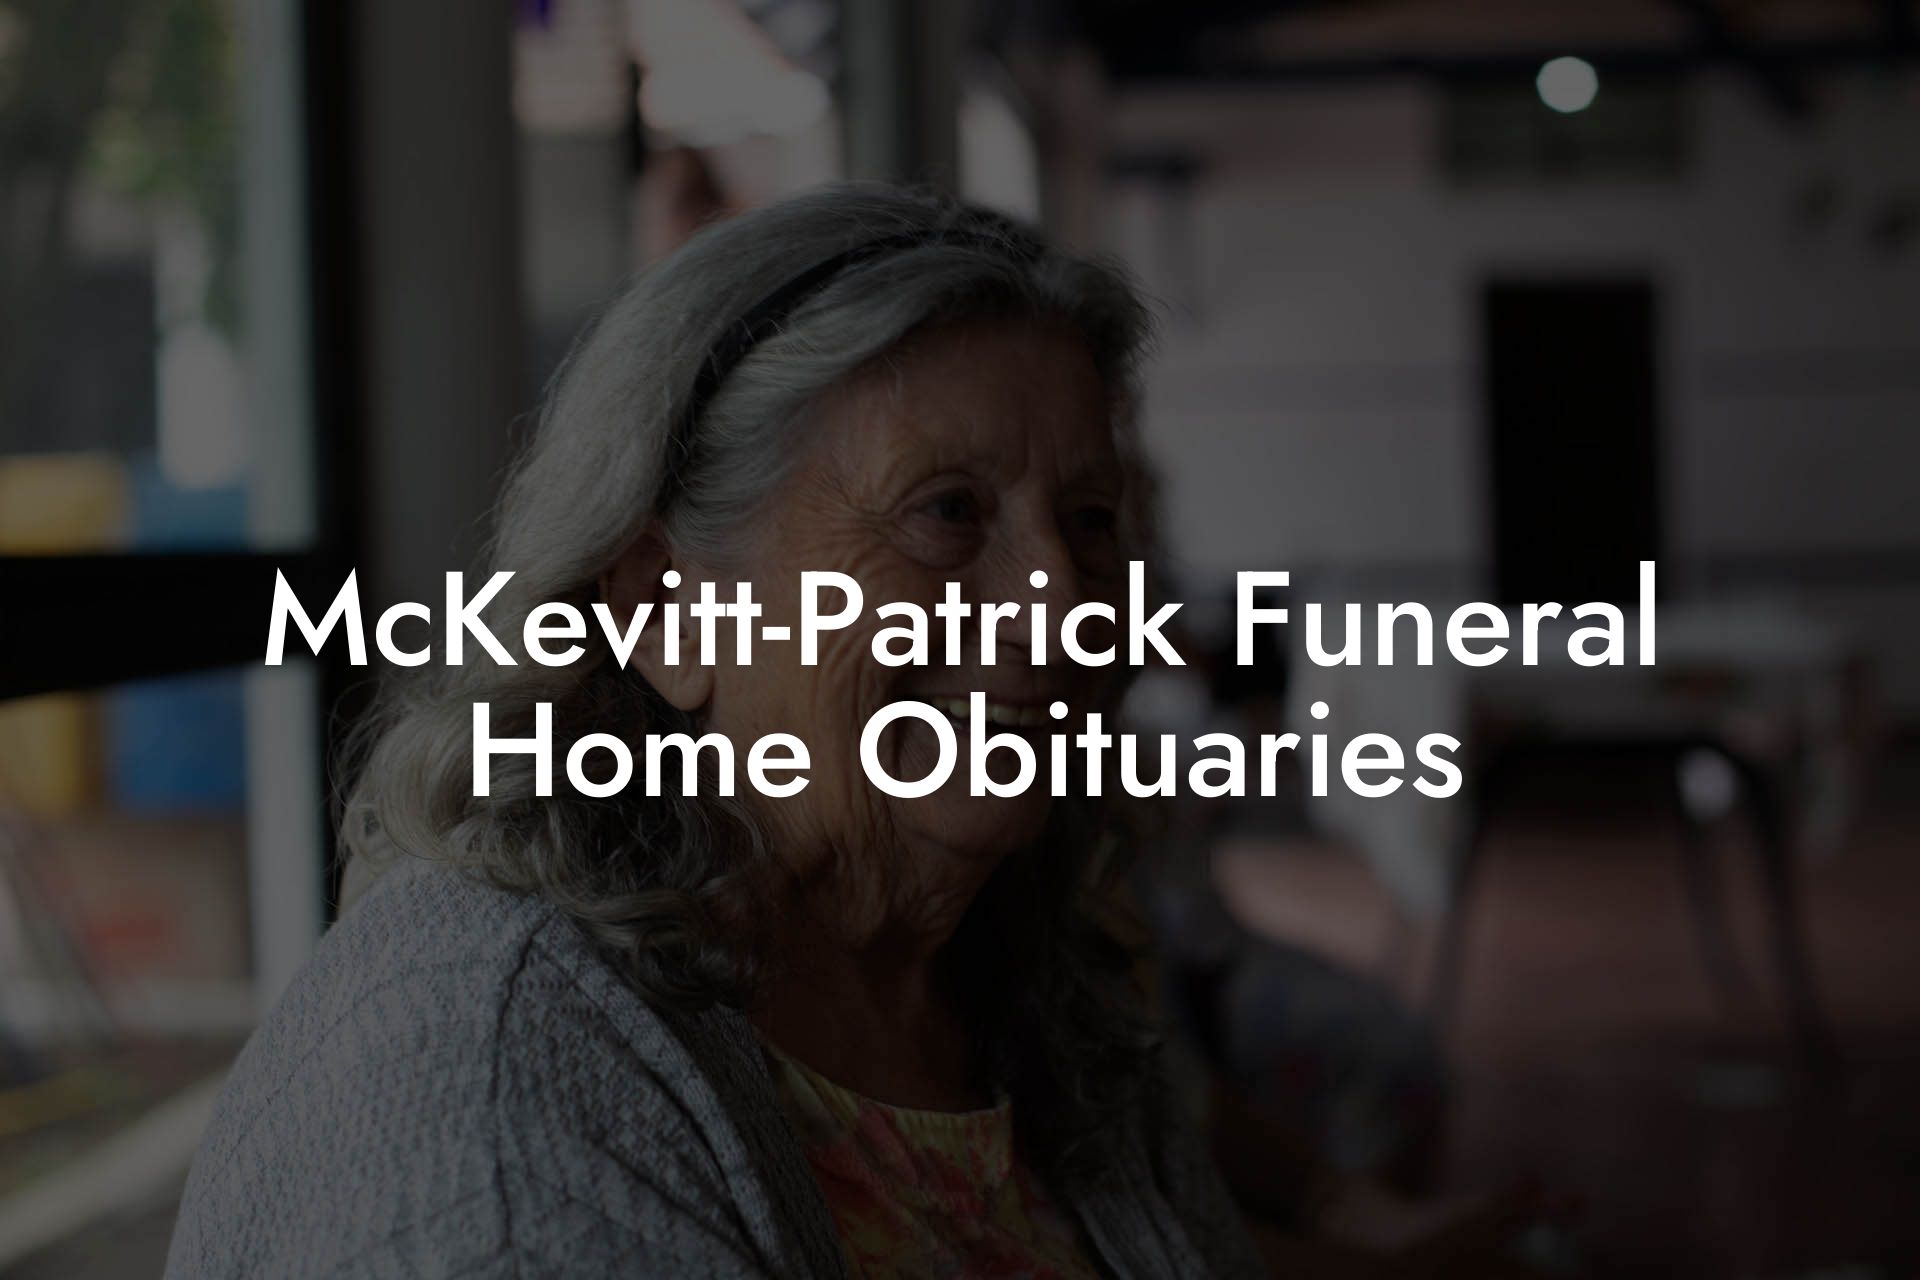 McKevitt-Patrick Funeral Home Obituaries